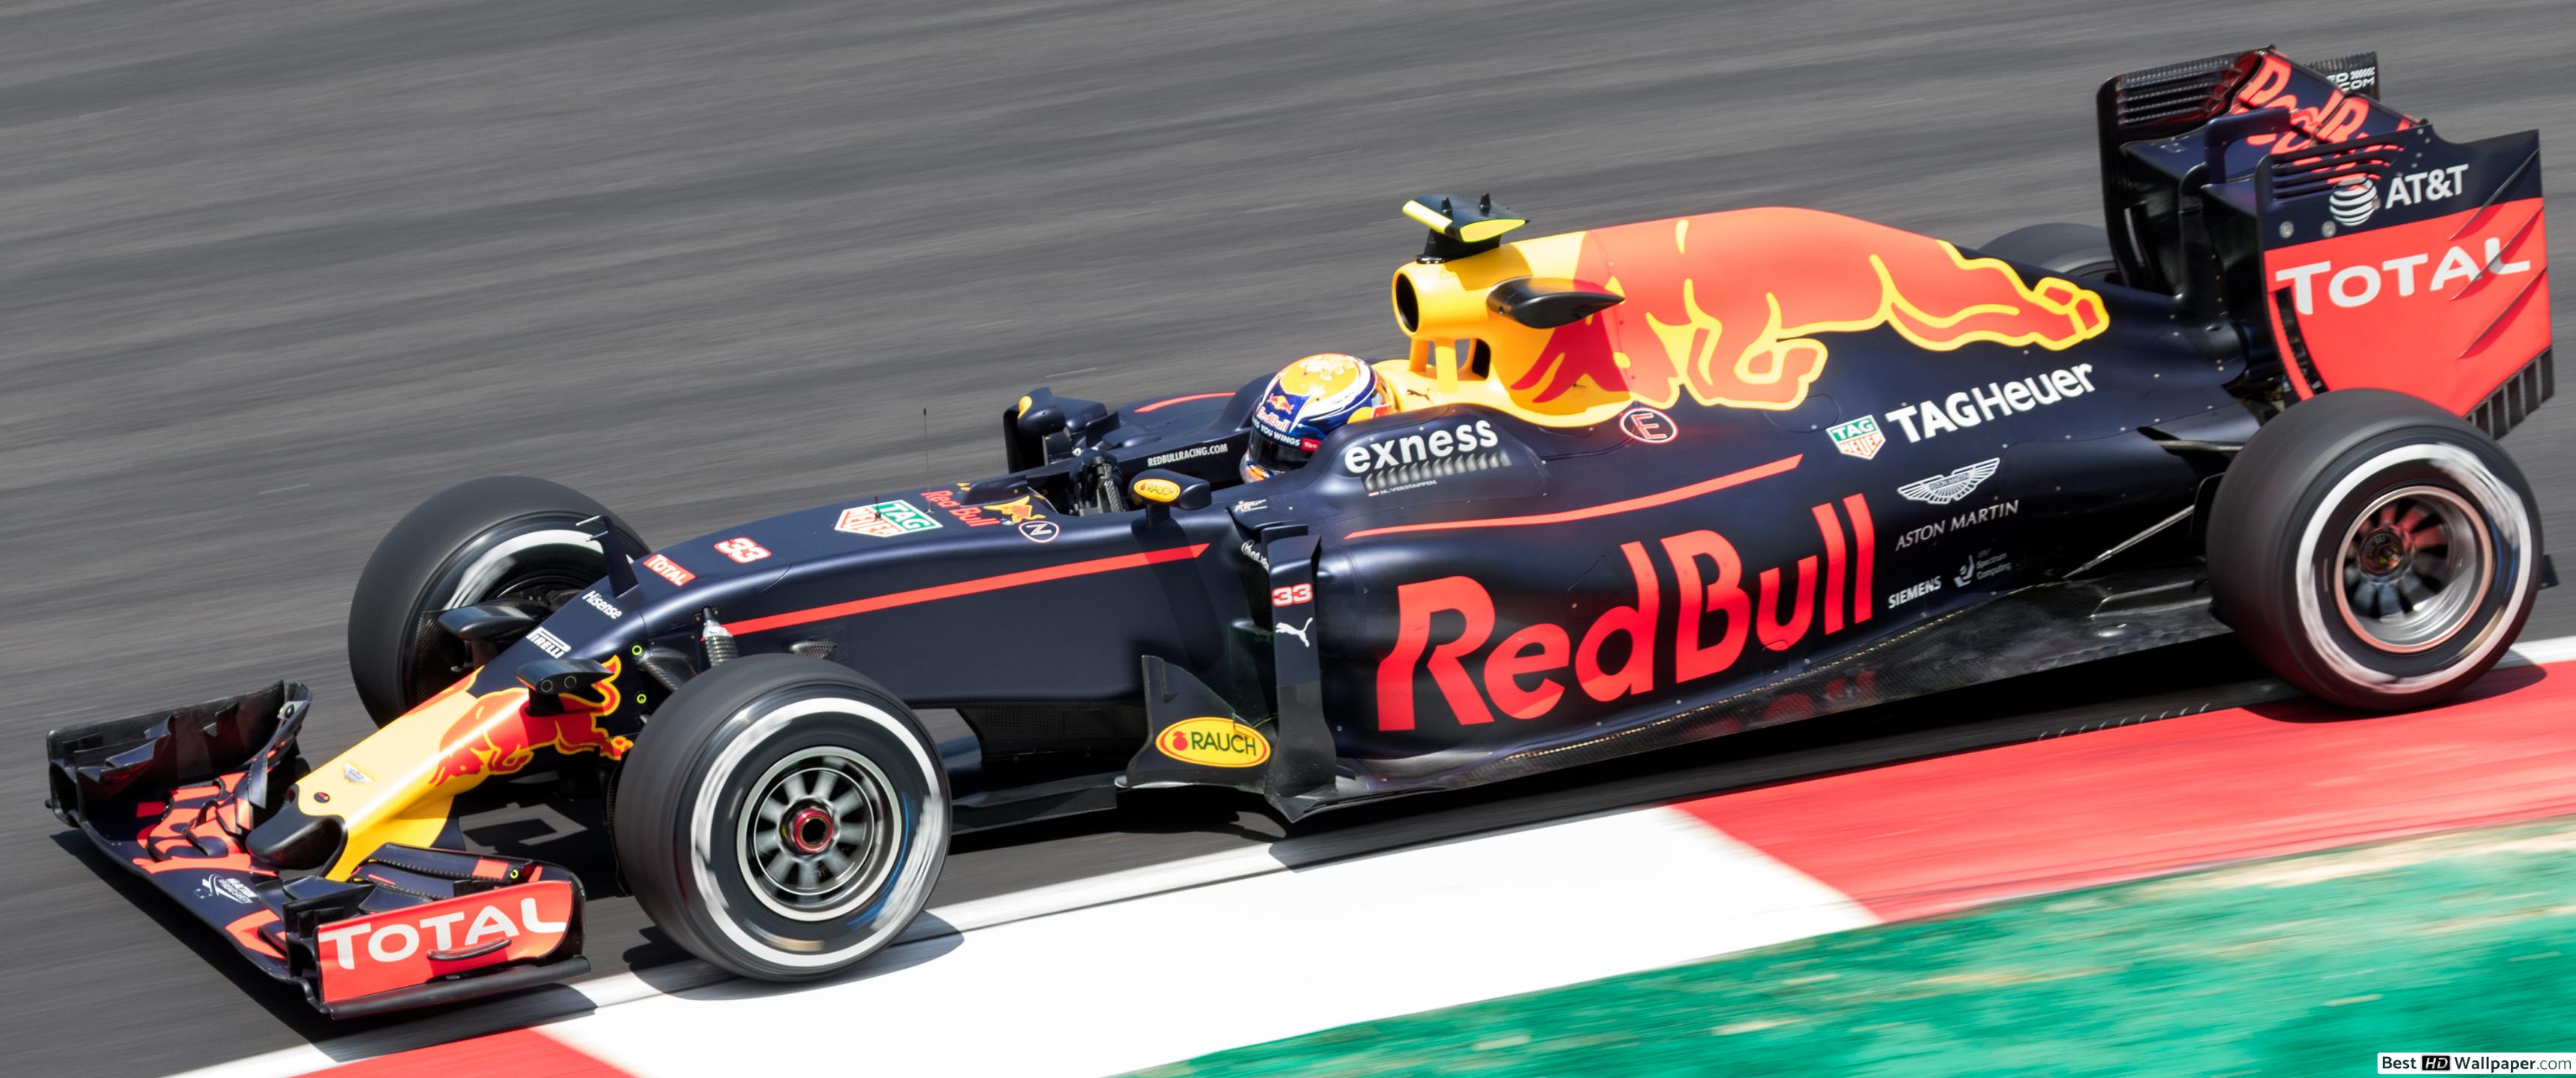 Red Bull Racing Max Verstappen HD wallpaper download